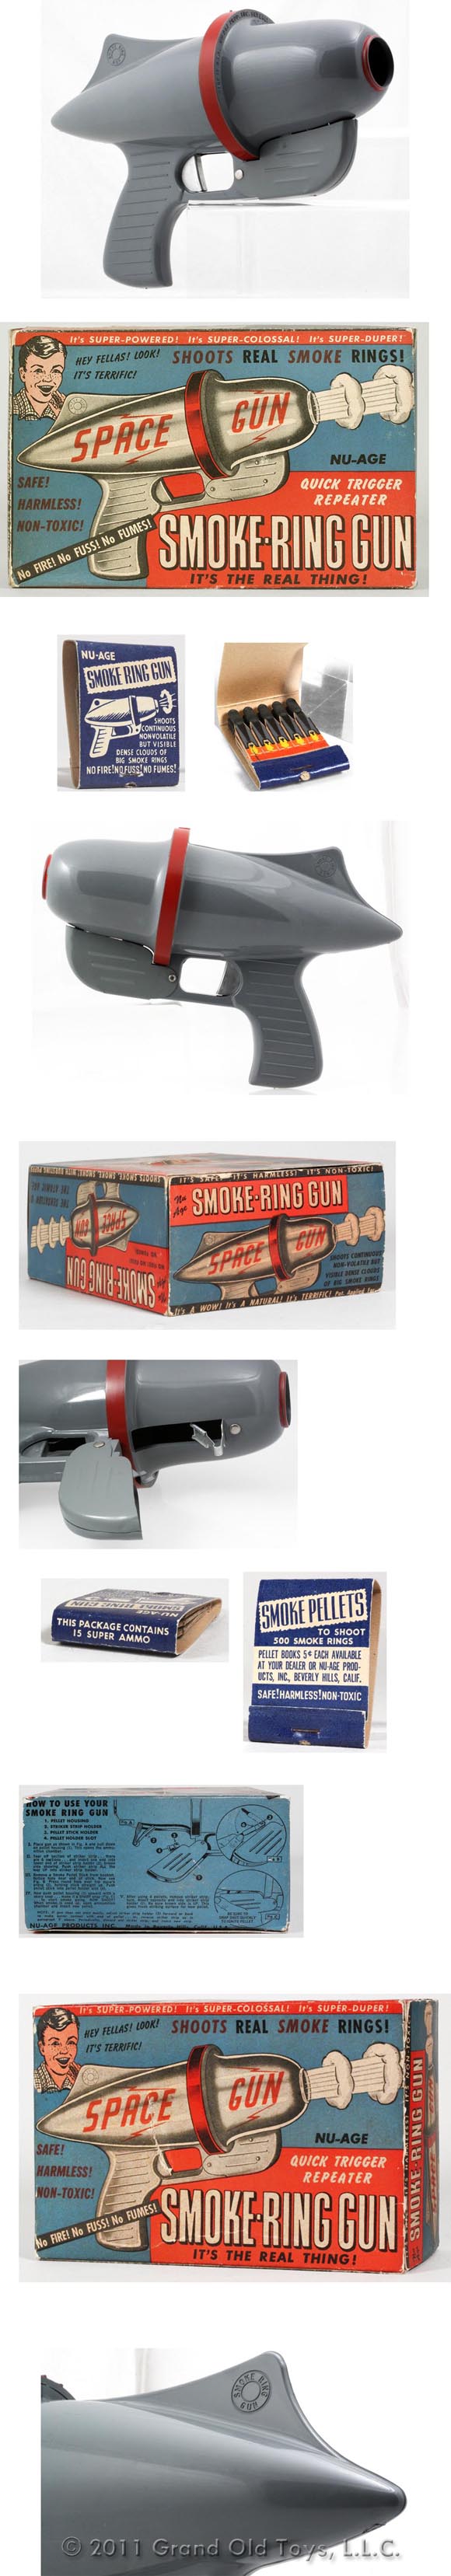 1954 Nu-Age Products Smoke Ring Gun In Original Box